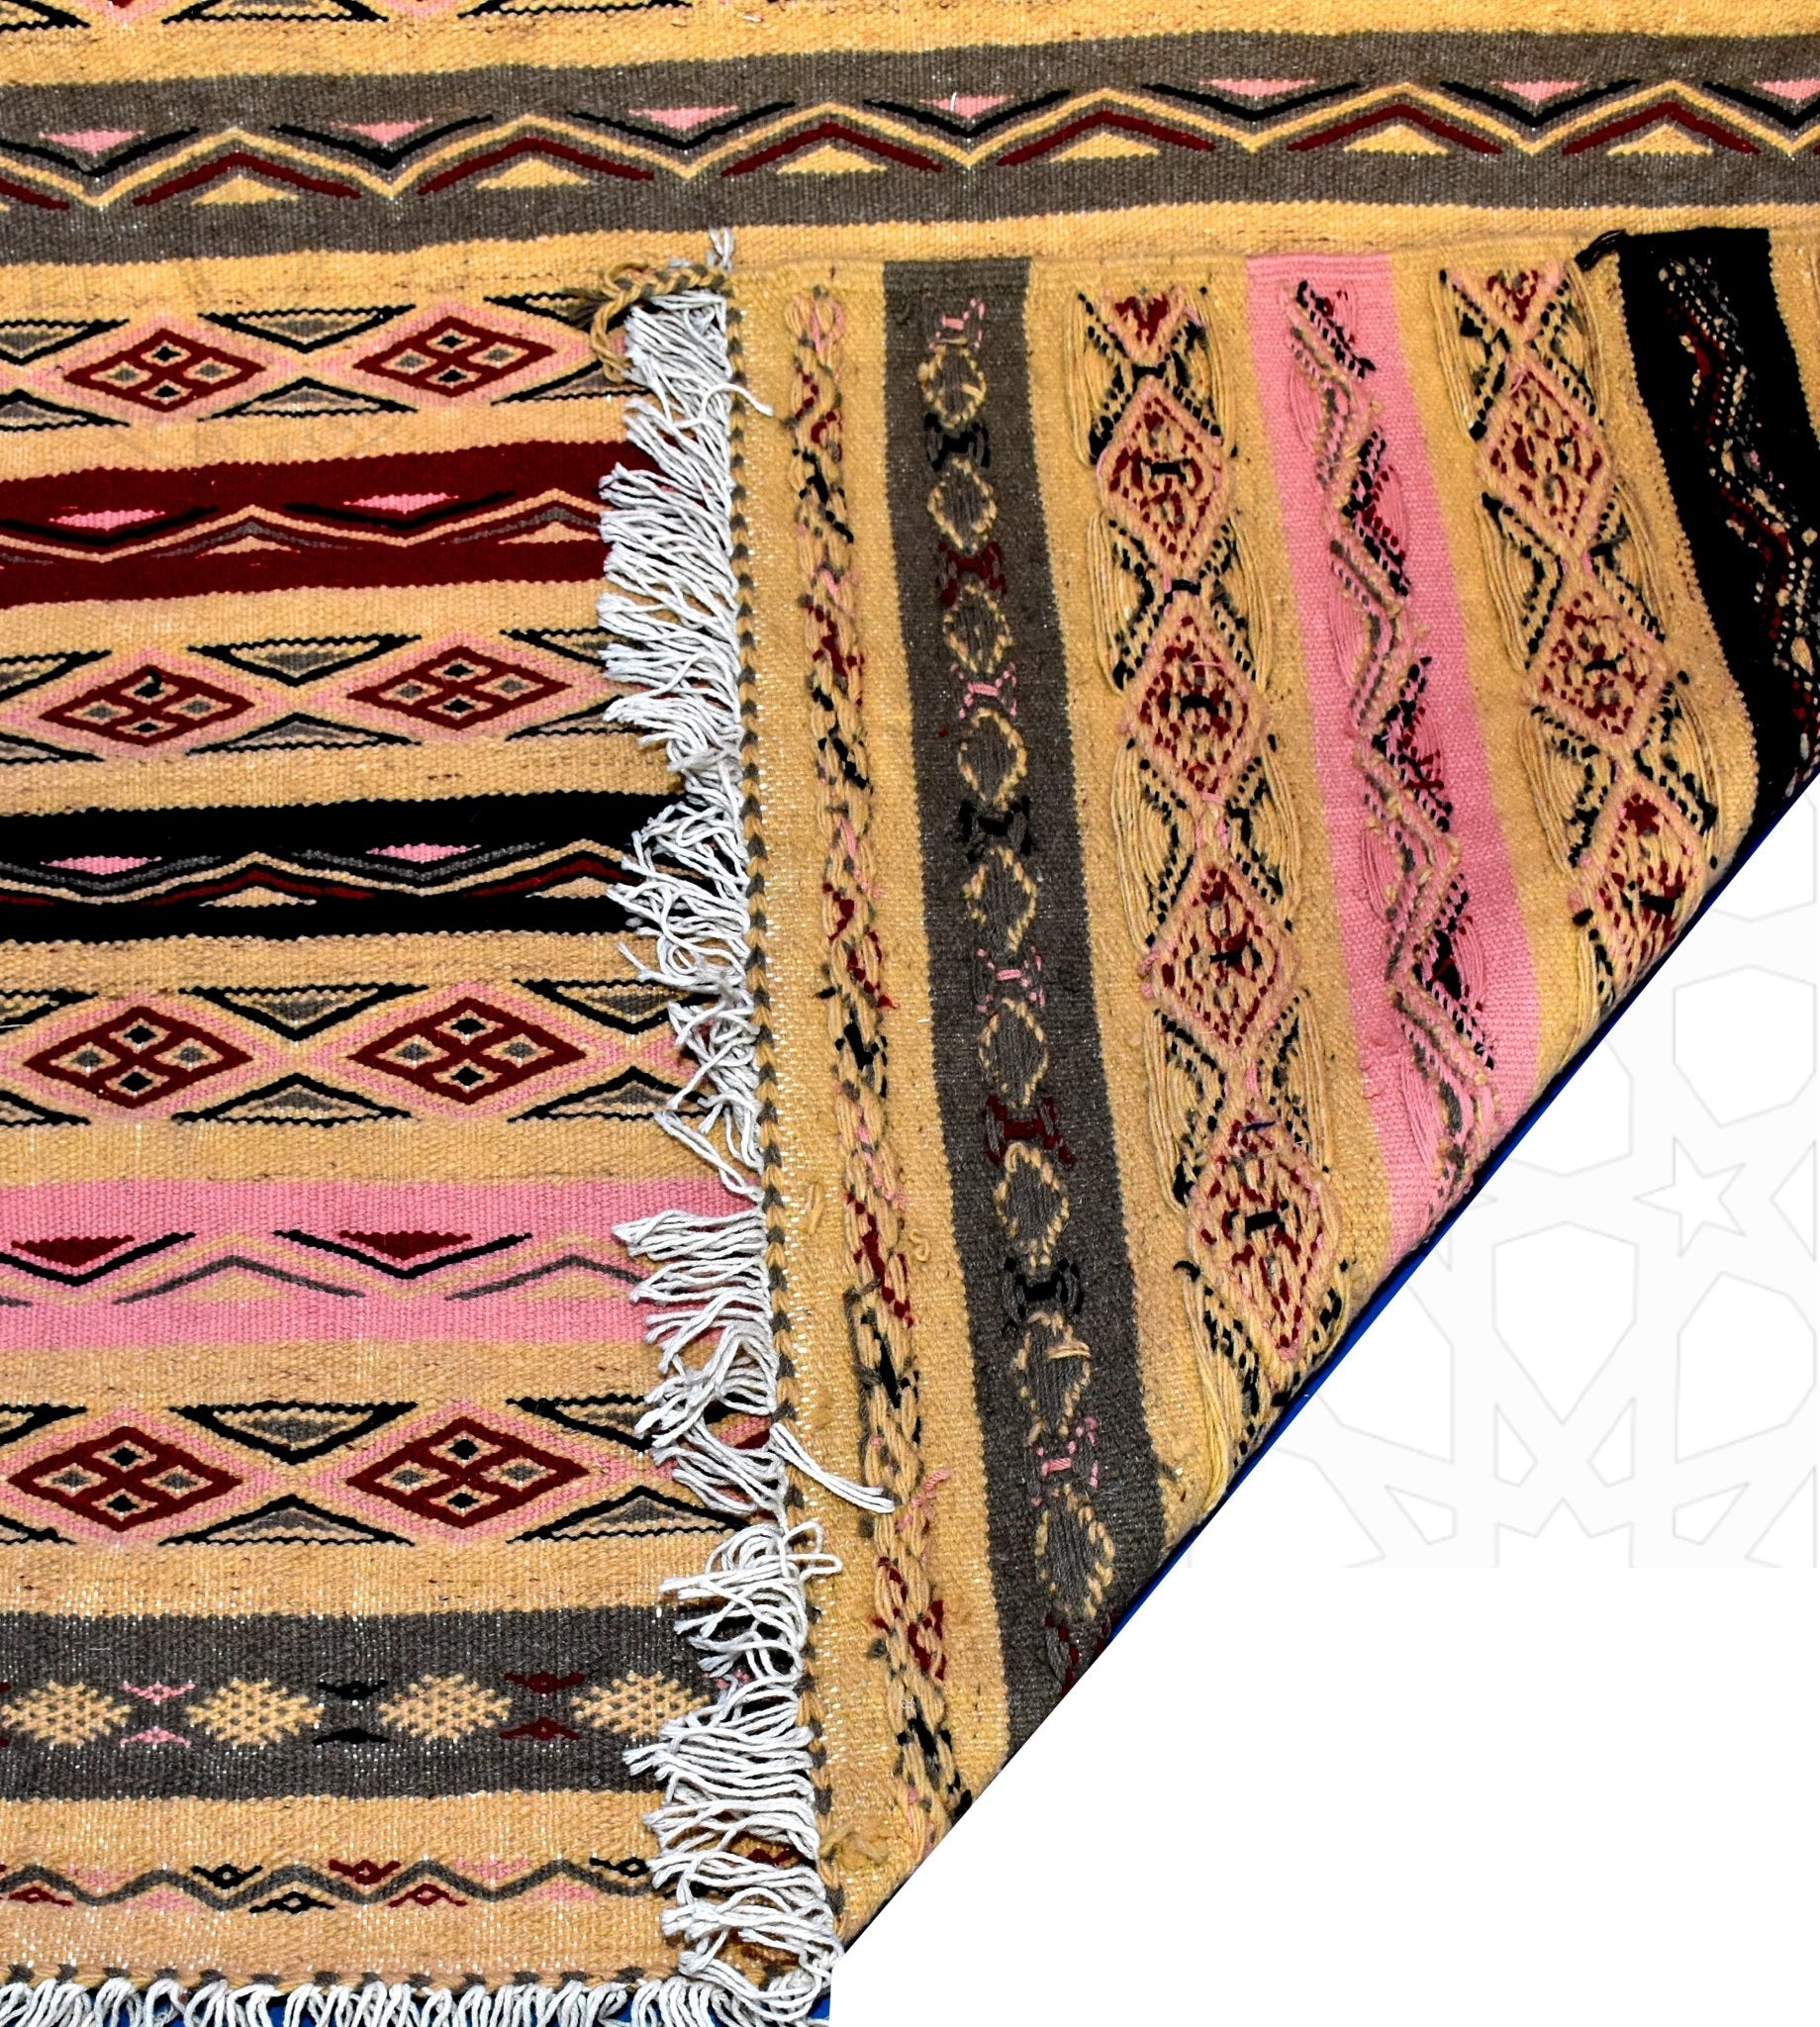 Flatweave kilim hanbal Moroccan rug - 4.6 x 6.1 ft / 140 x 210 cm - Berbers Market